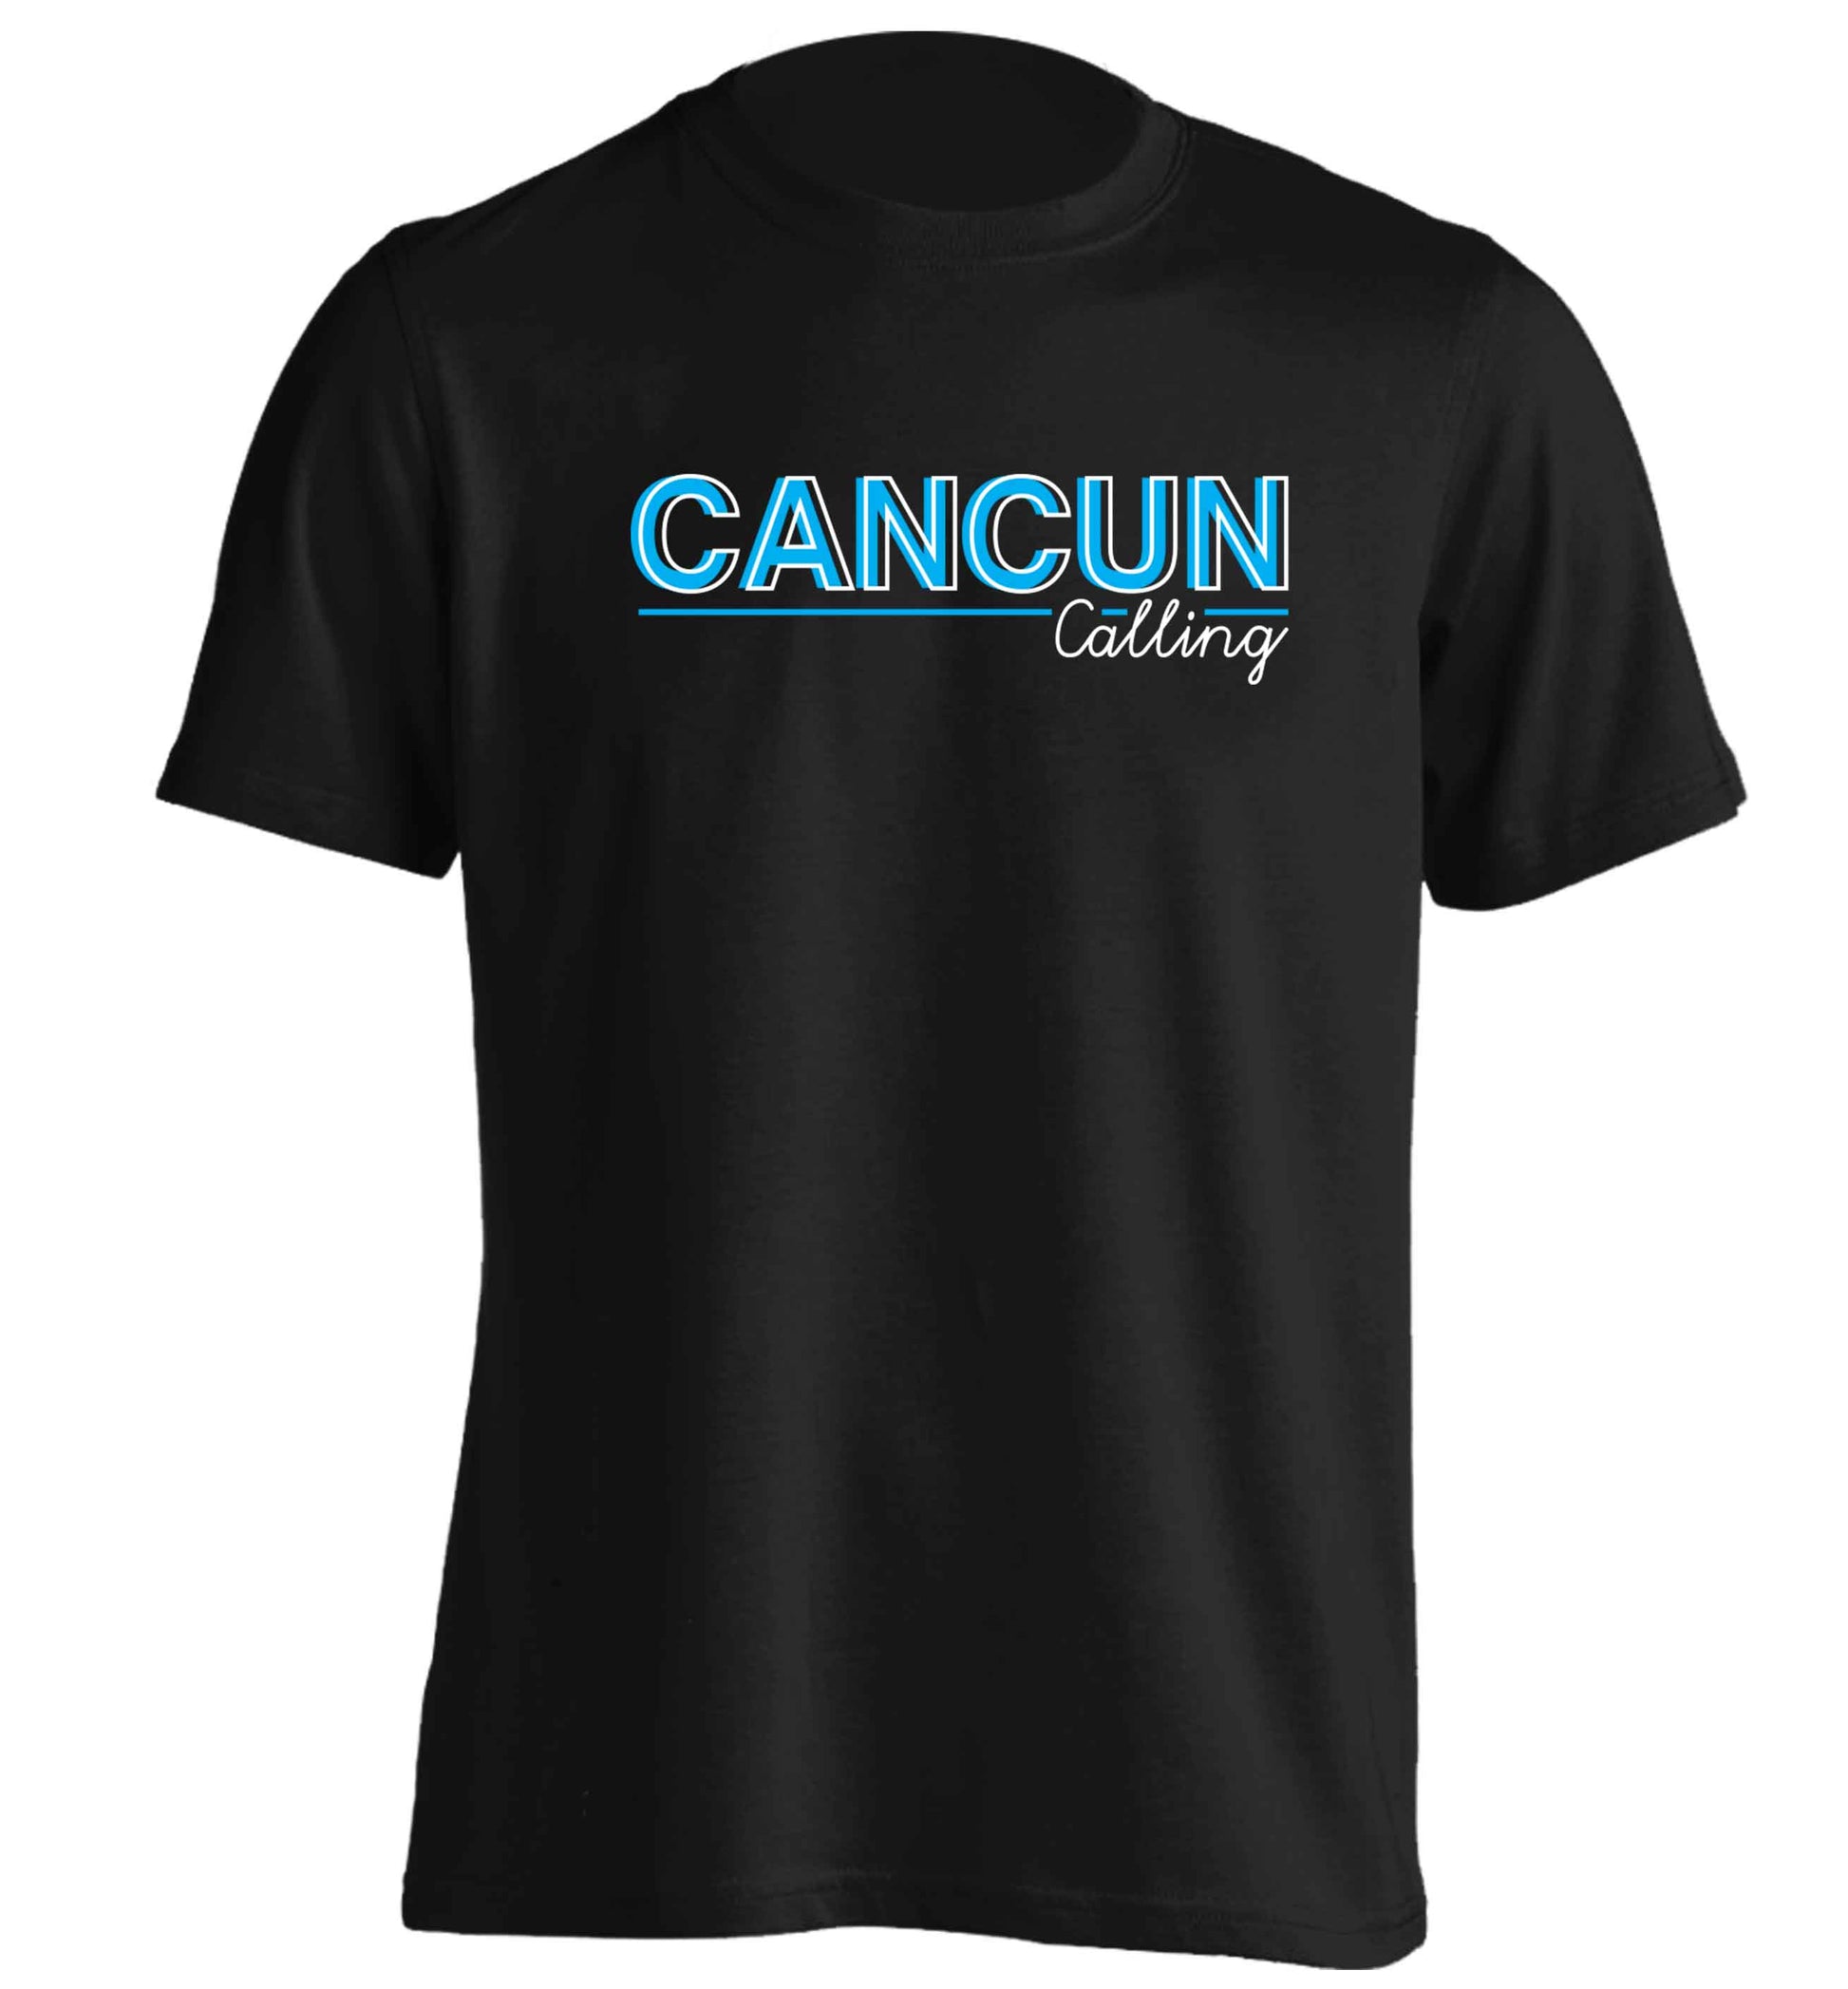 Cancun calling adults unisex black Tshirt 2XL